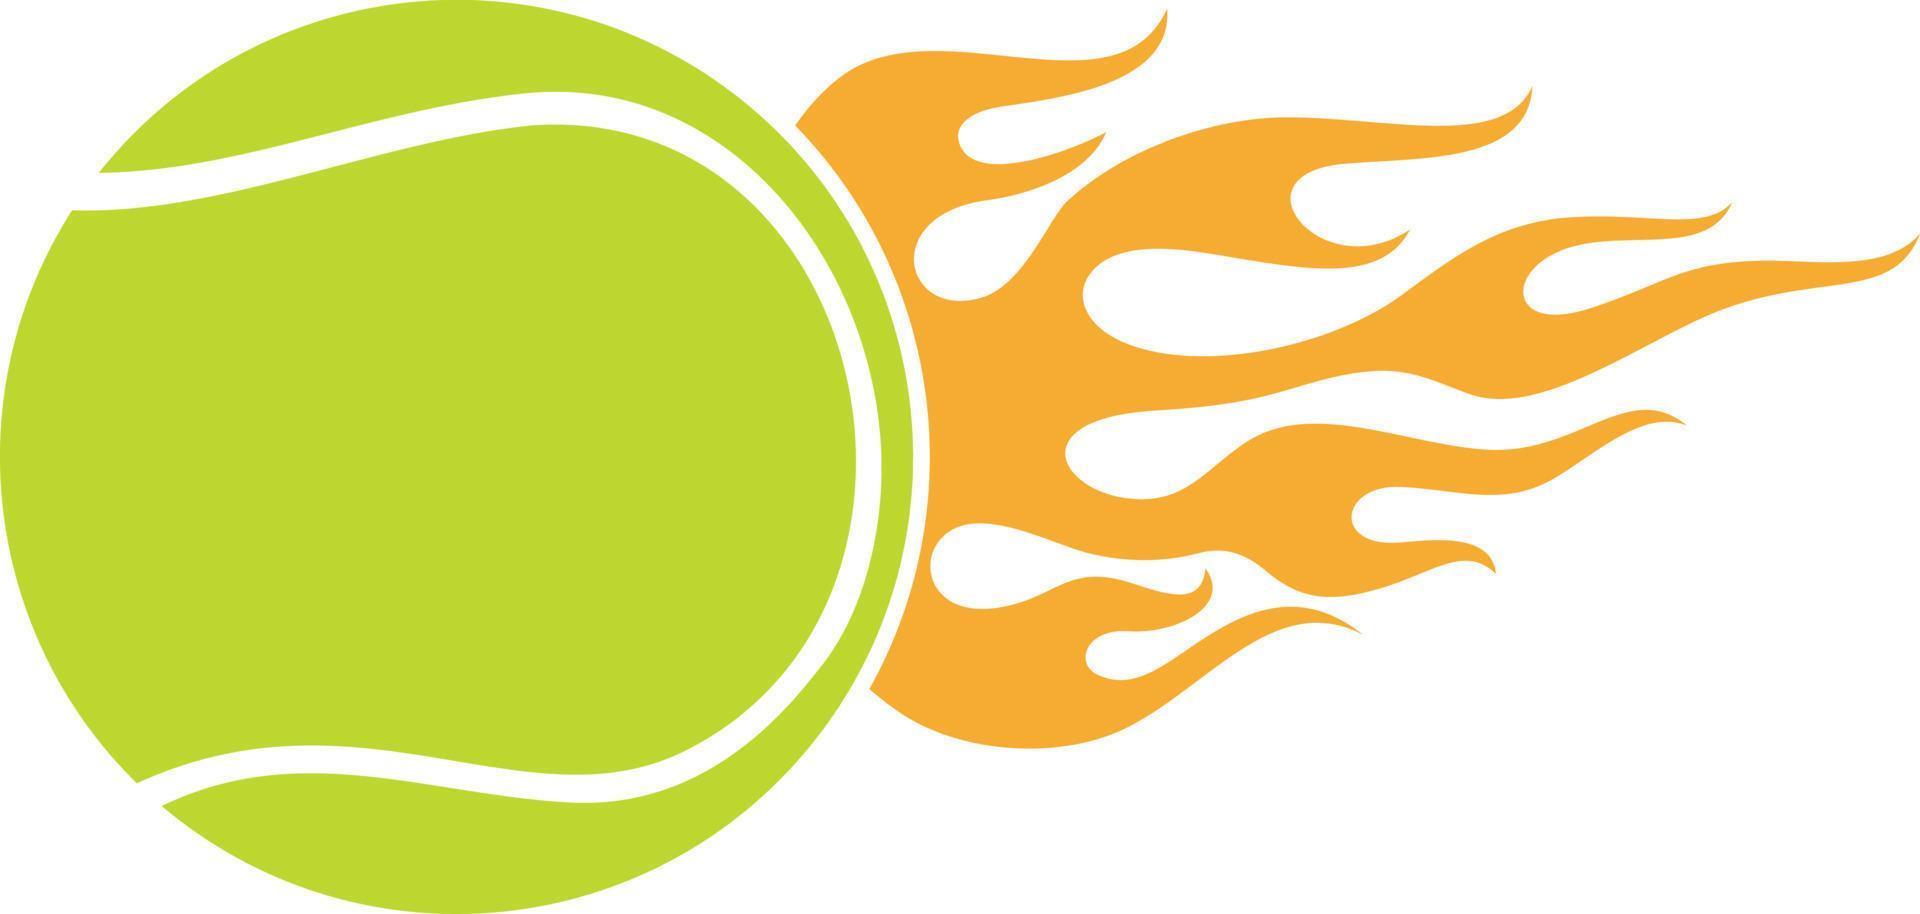 Flaming tennis ball color vector illustration